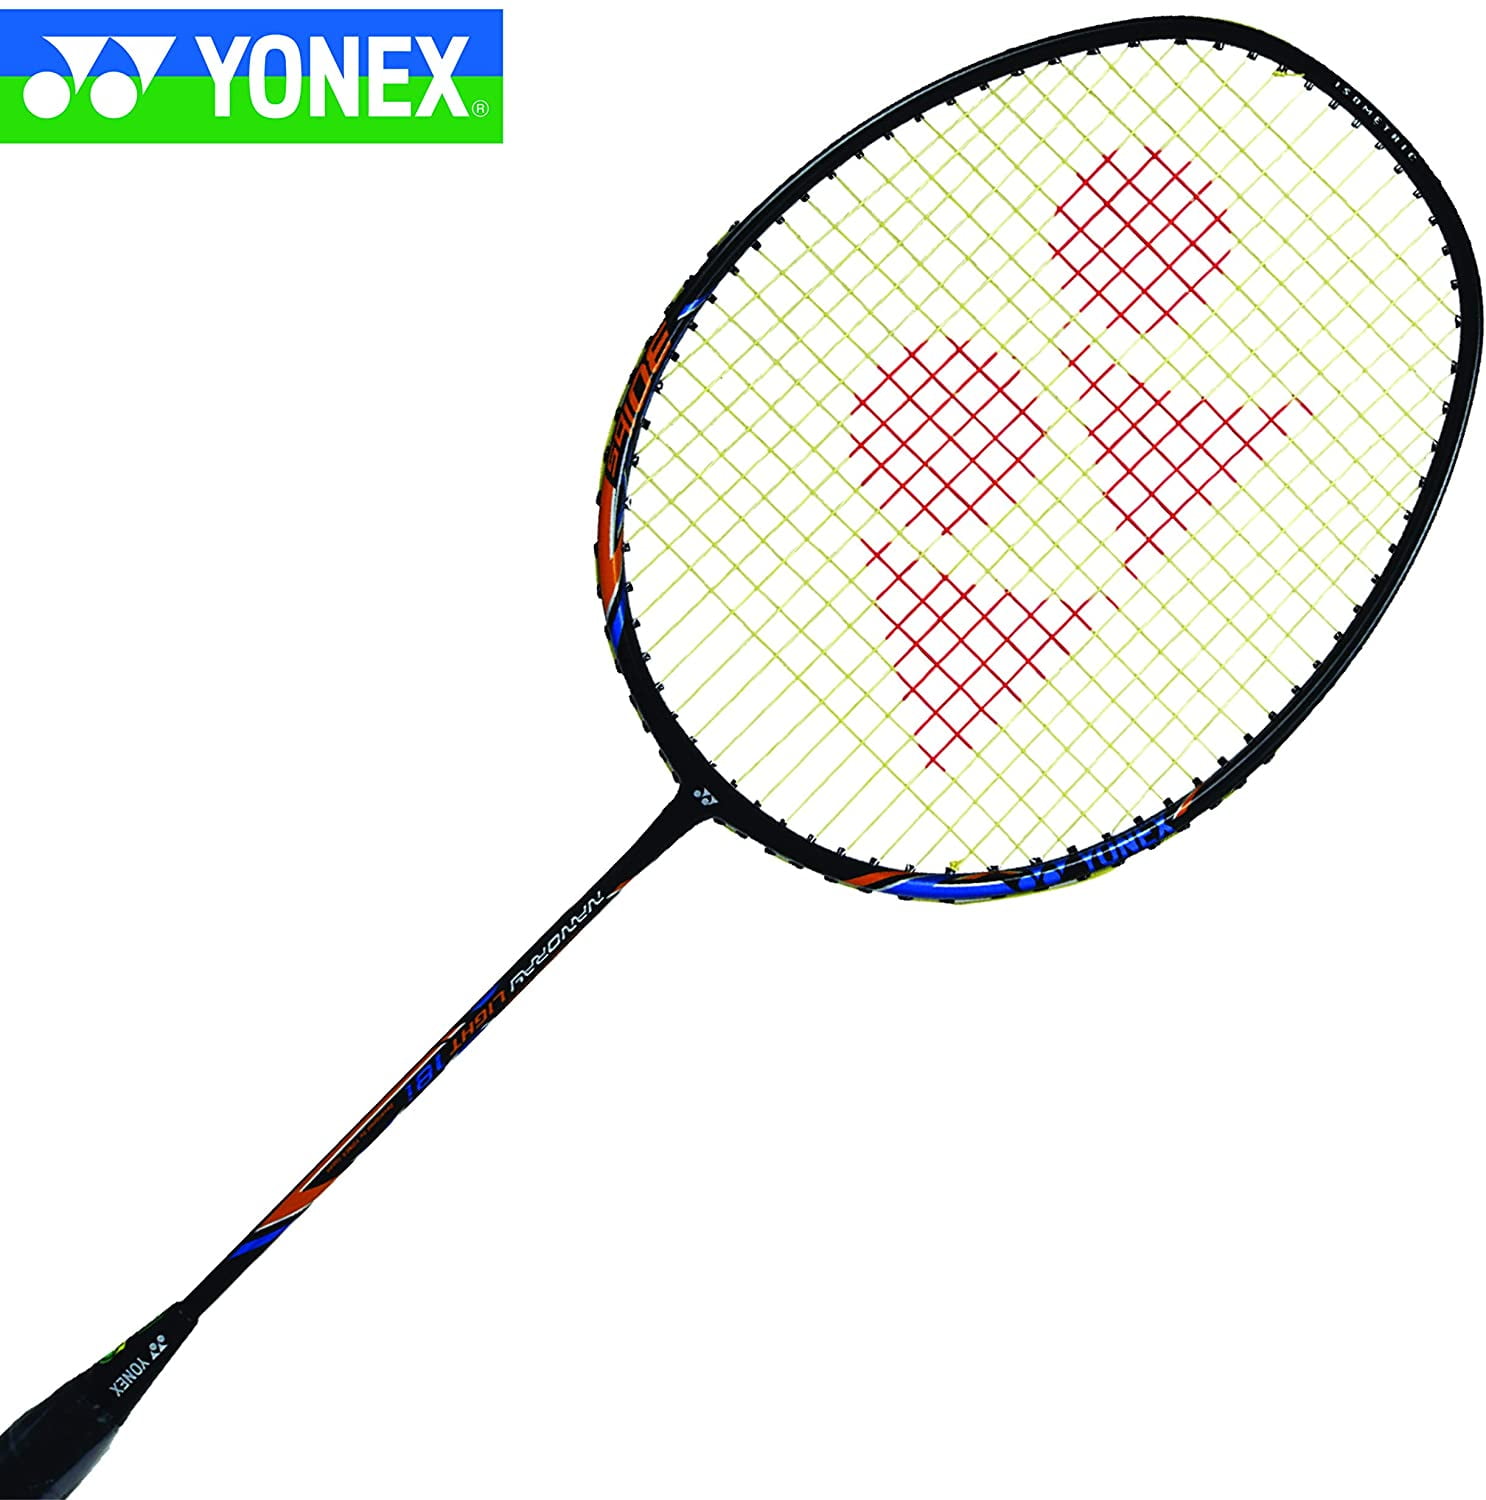 77g, 30 lbs Tension Yonex Nanoray Light 18i Graphite Badminton Racquet 